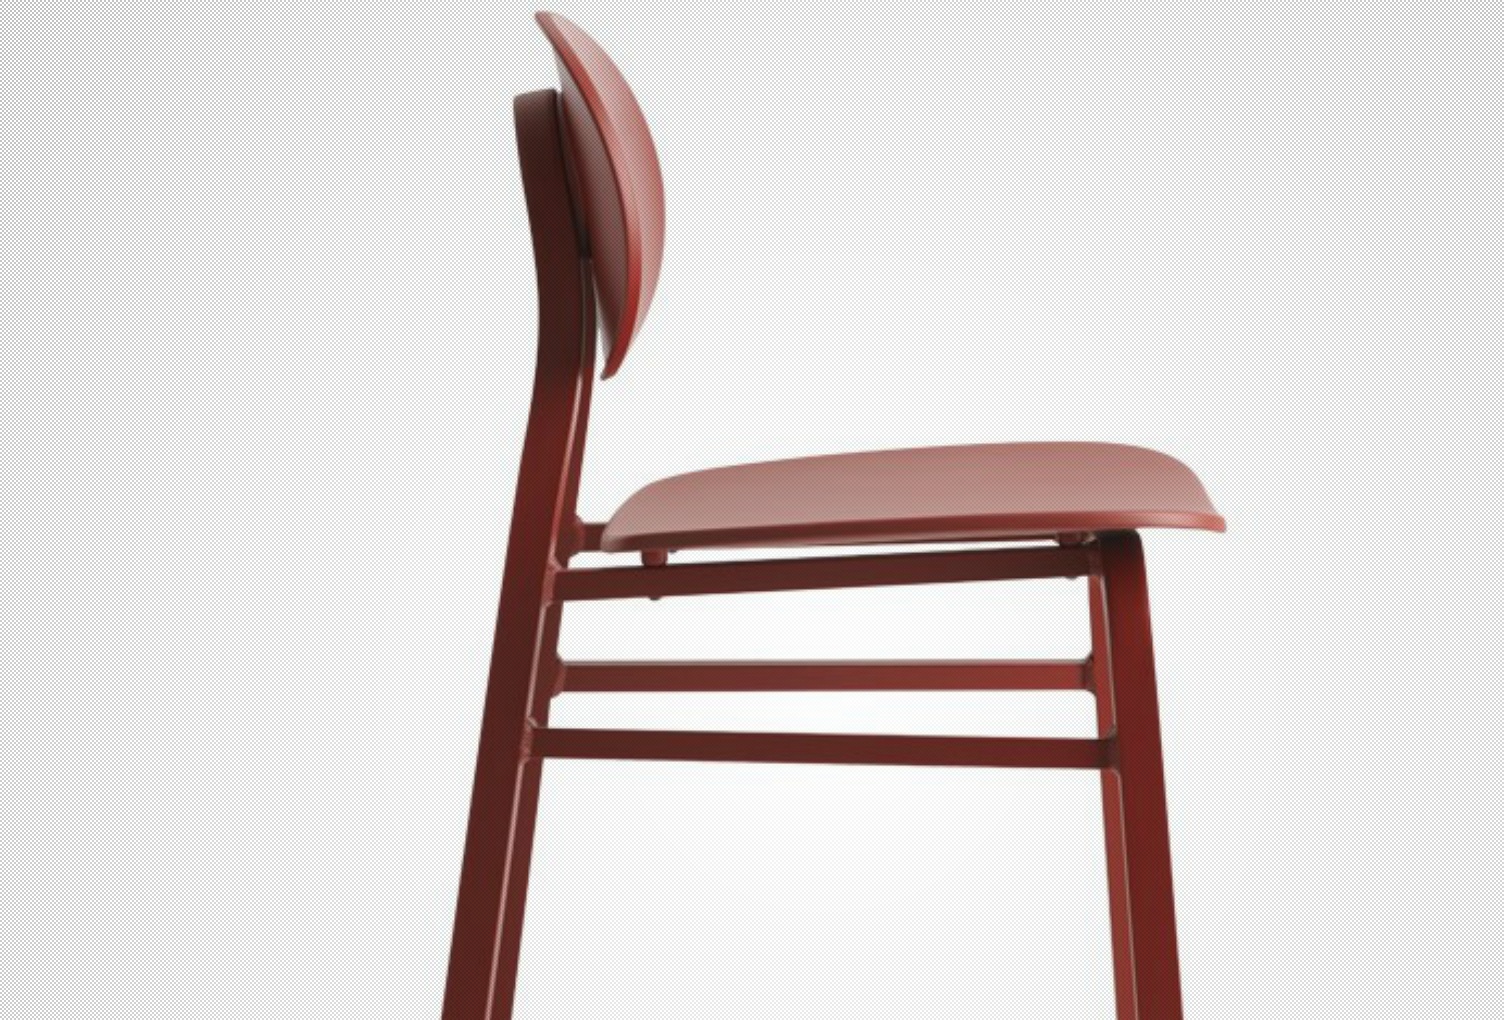 Patrick Jouin's Elipse Chair for Zanotta